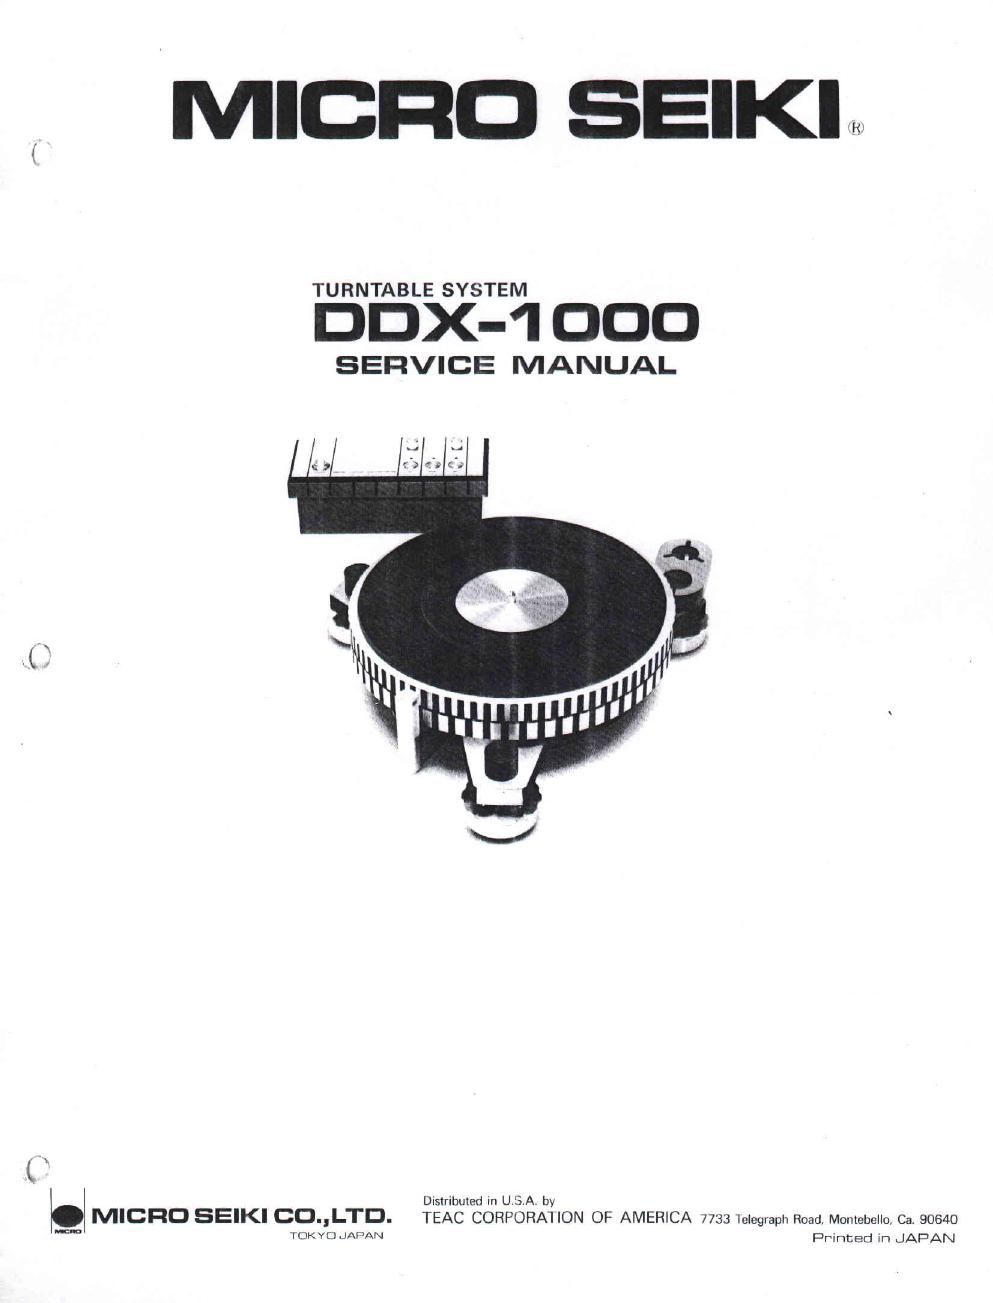 micro seiki ddx 1000 service manual